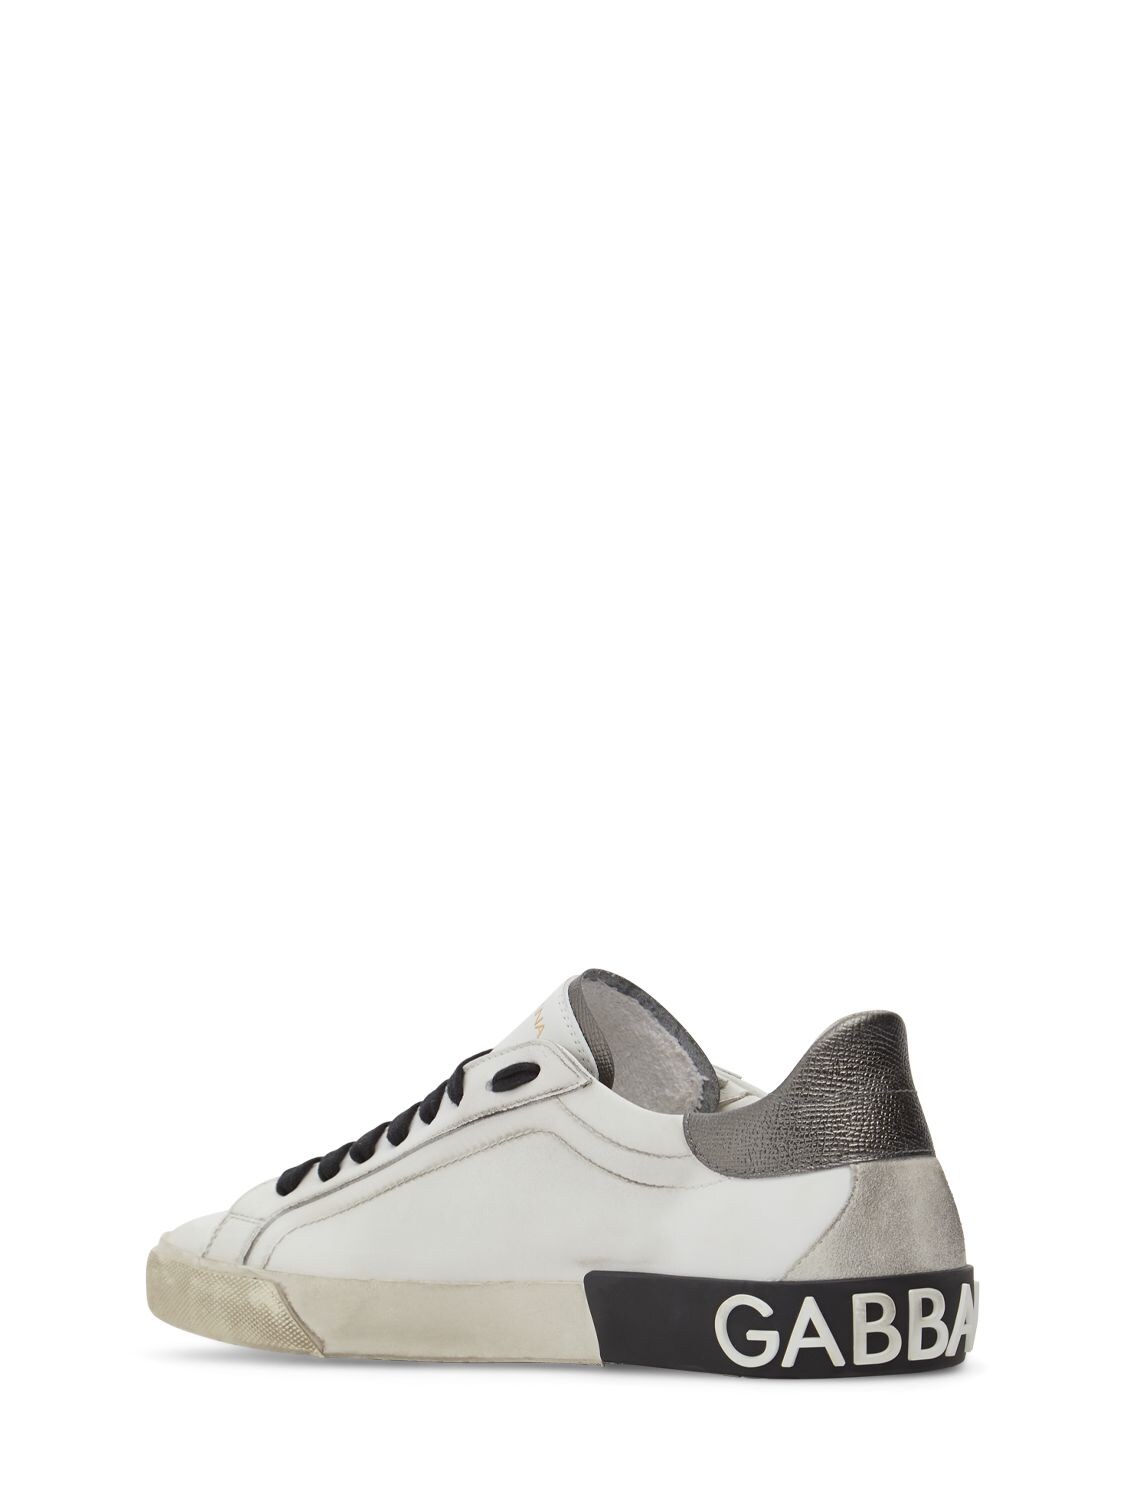 Shop Dolce & Gabbana New Portofino Dg Low Top Sneakers In White,black